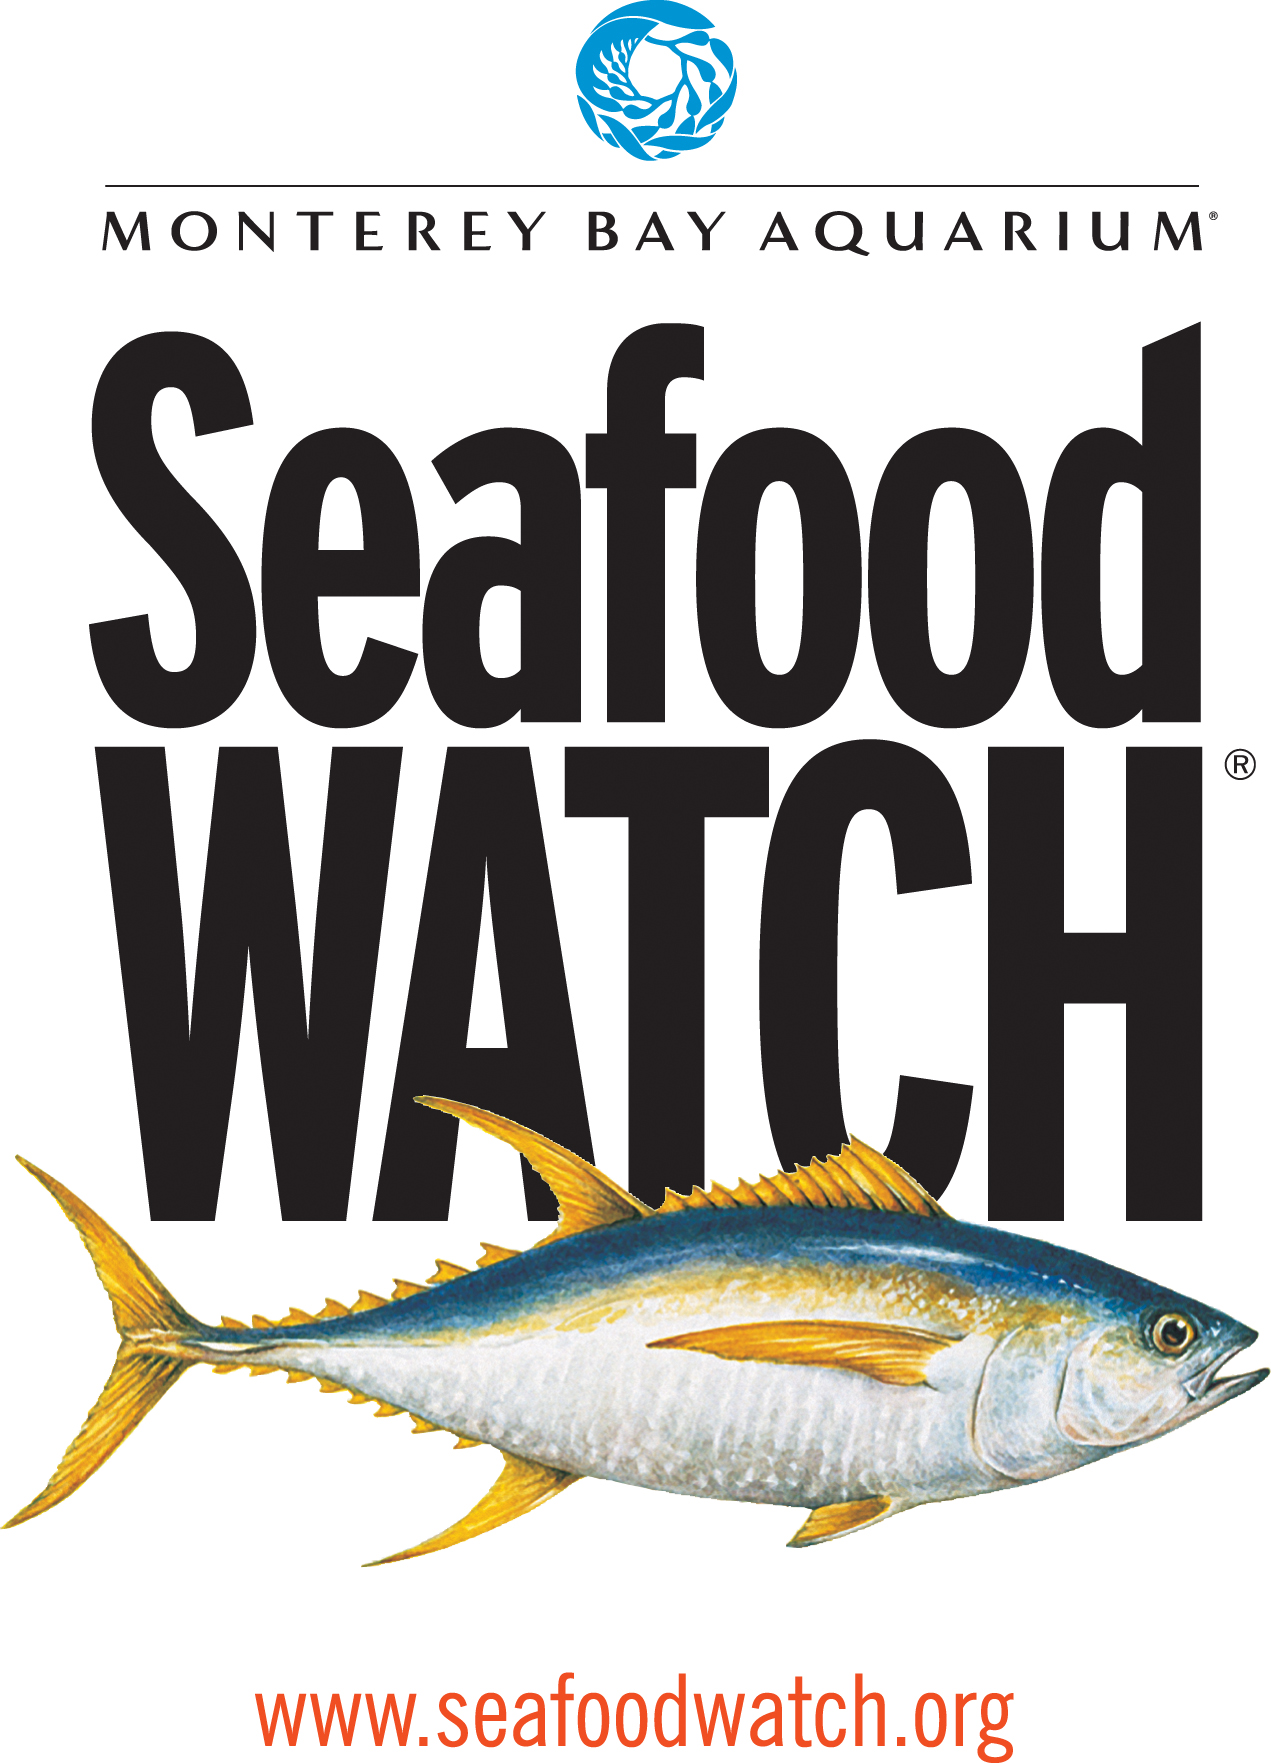 Monterey Bay Aquarium's Seafood Watch